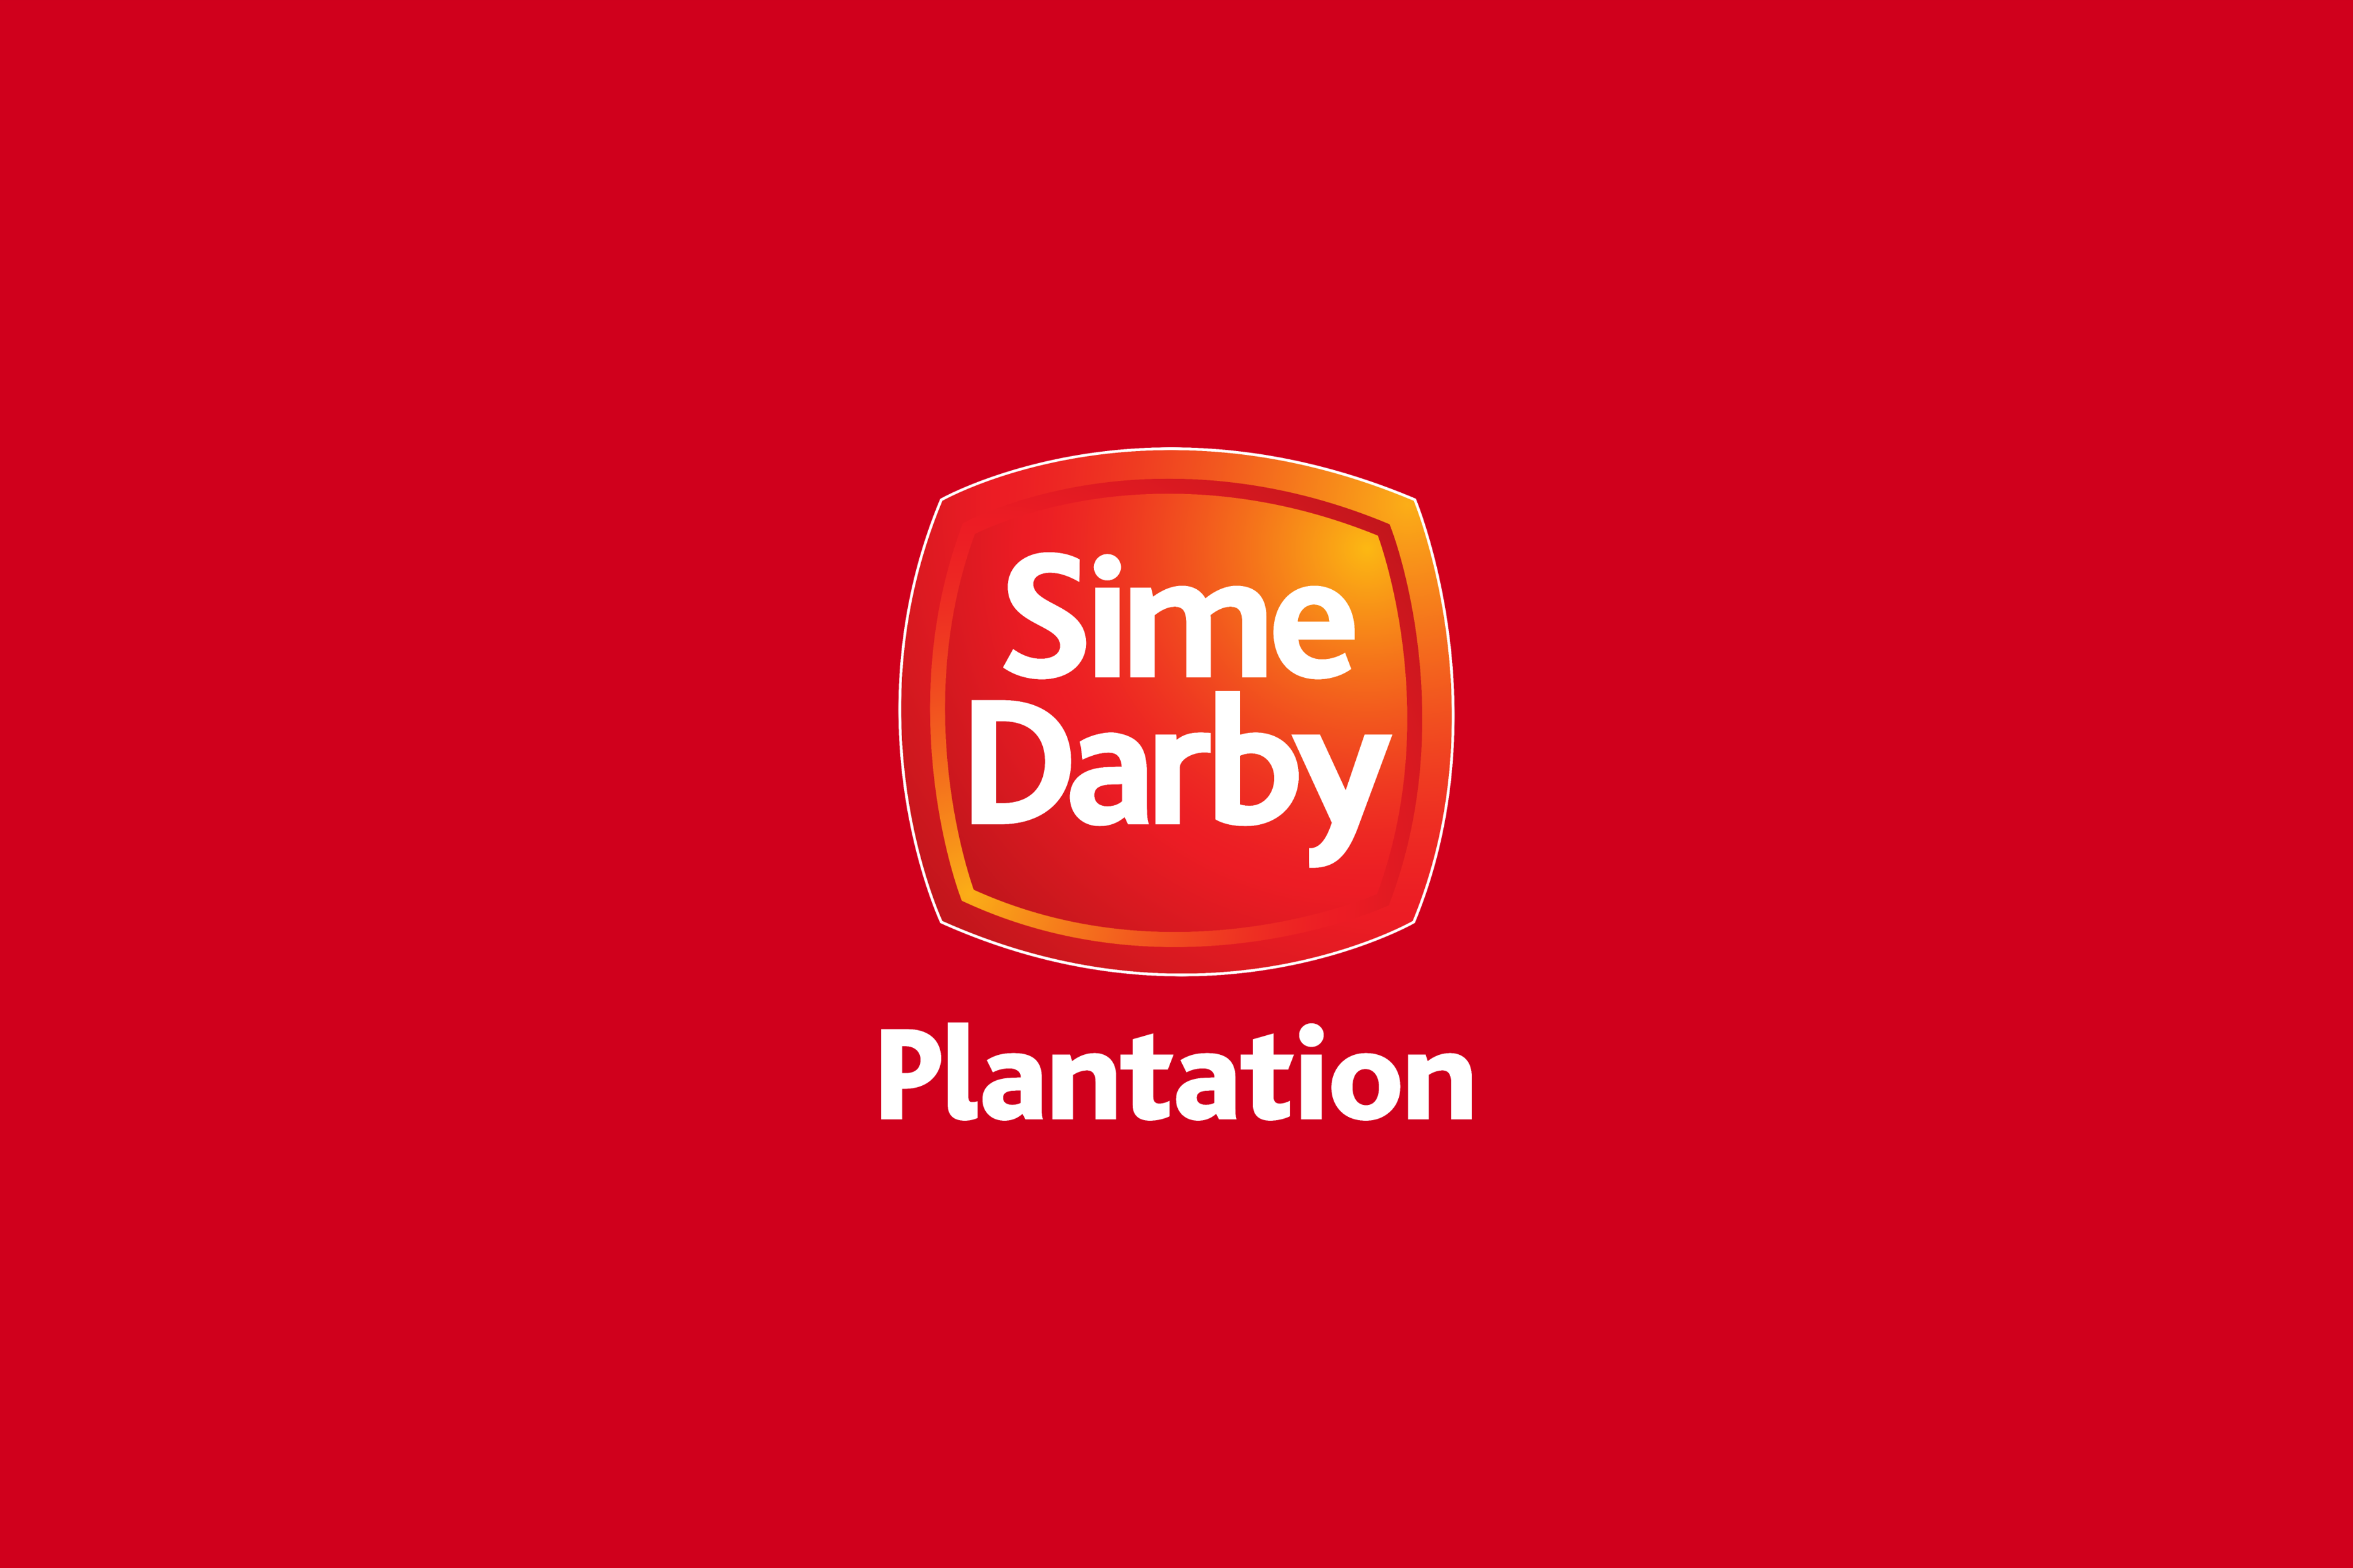 Sime darby plantation share price